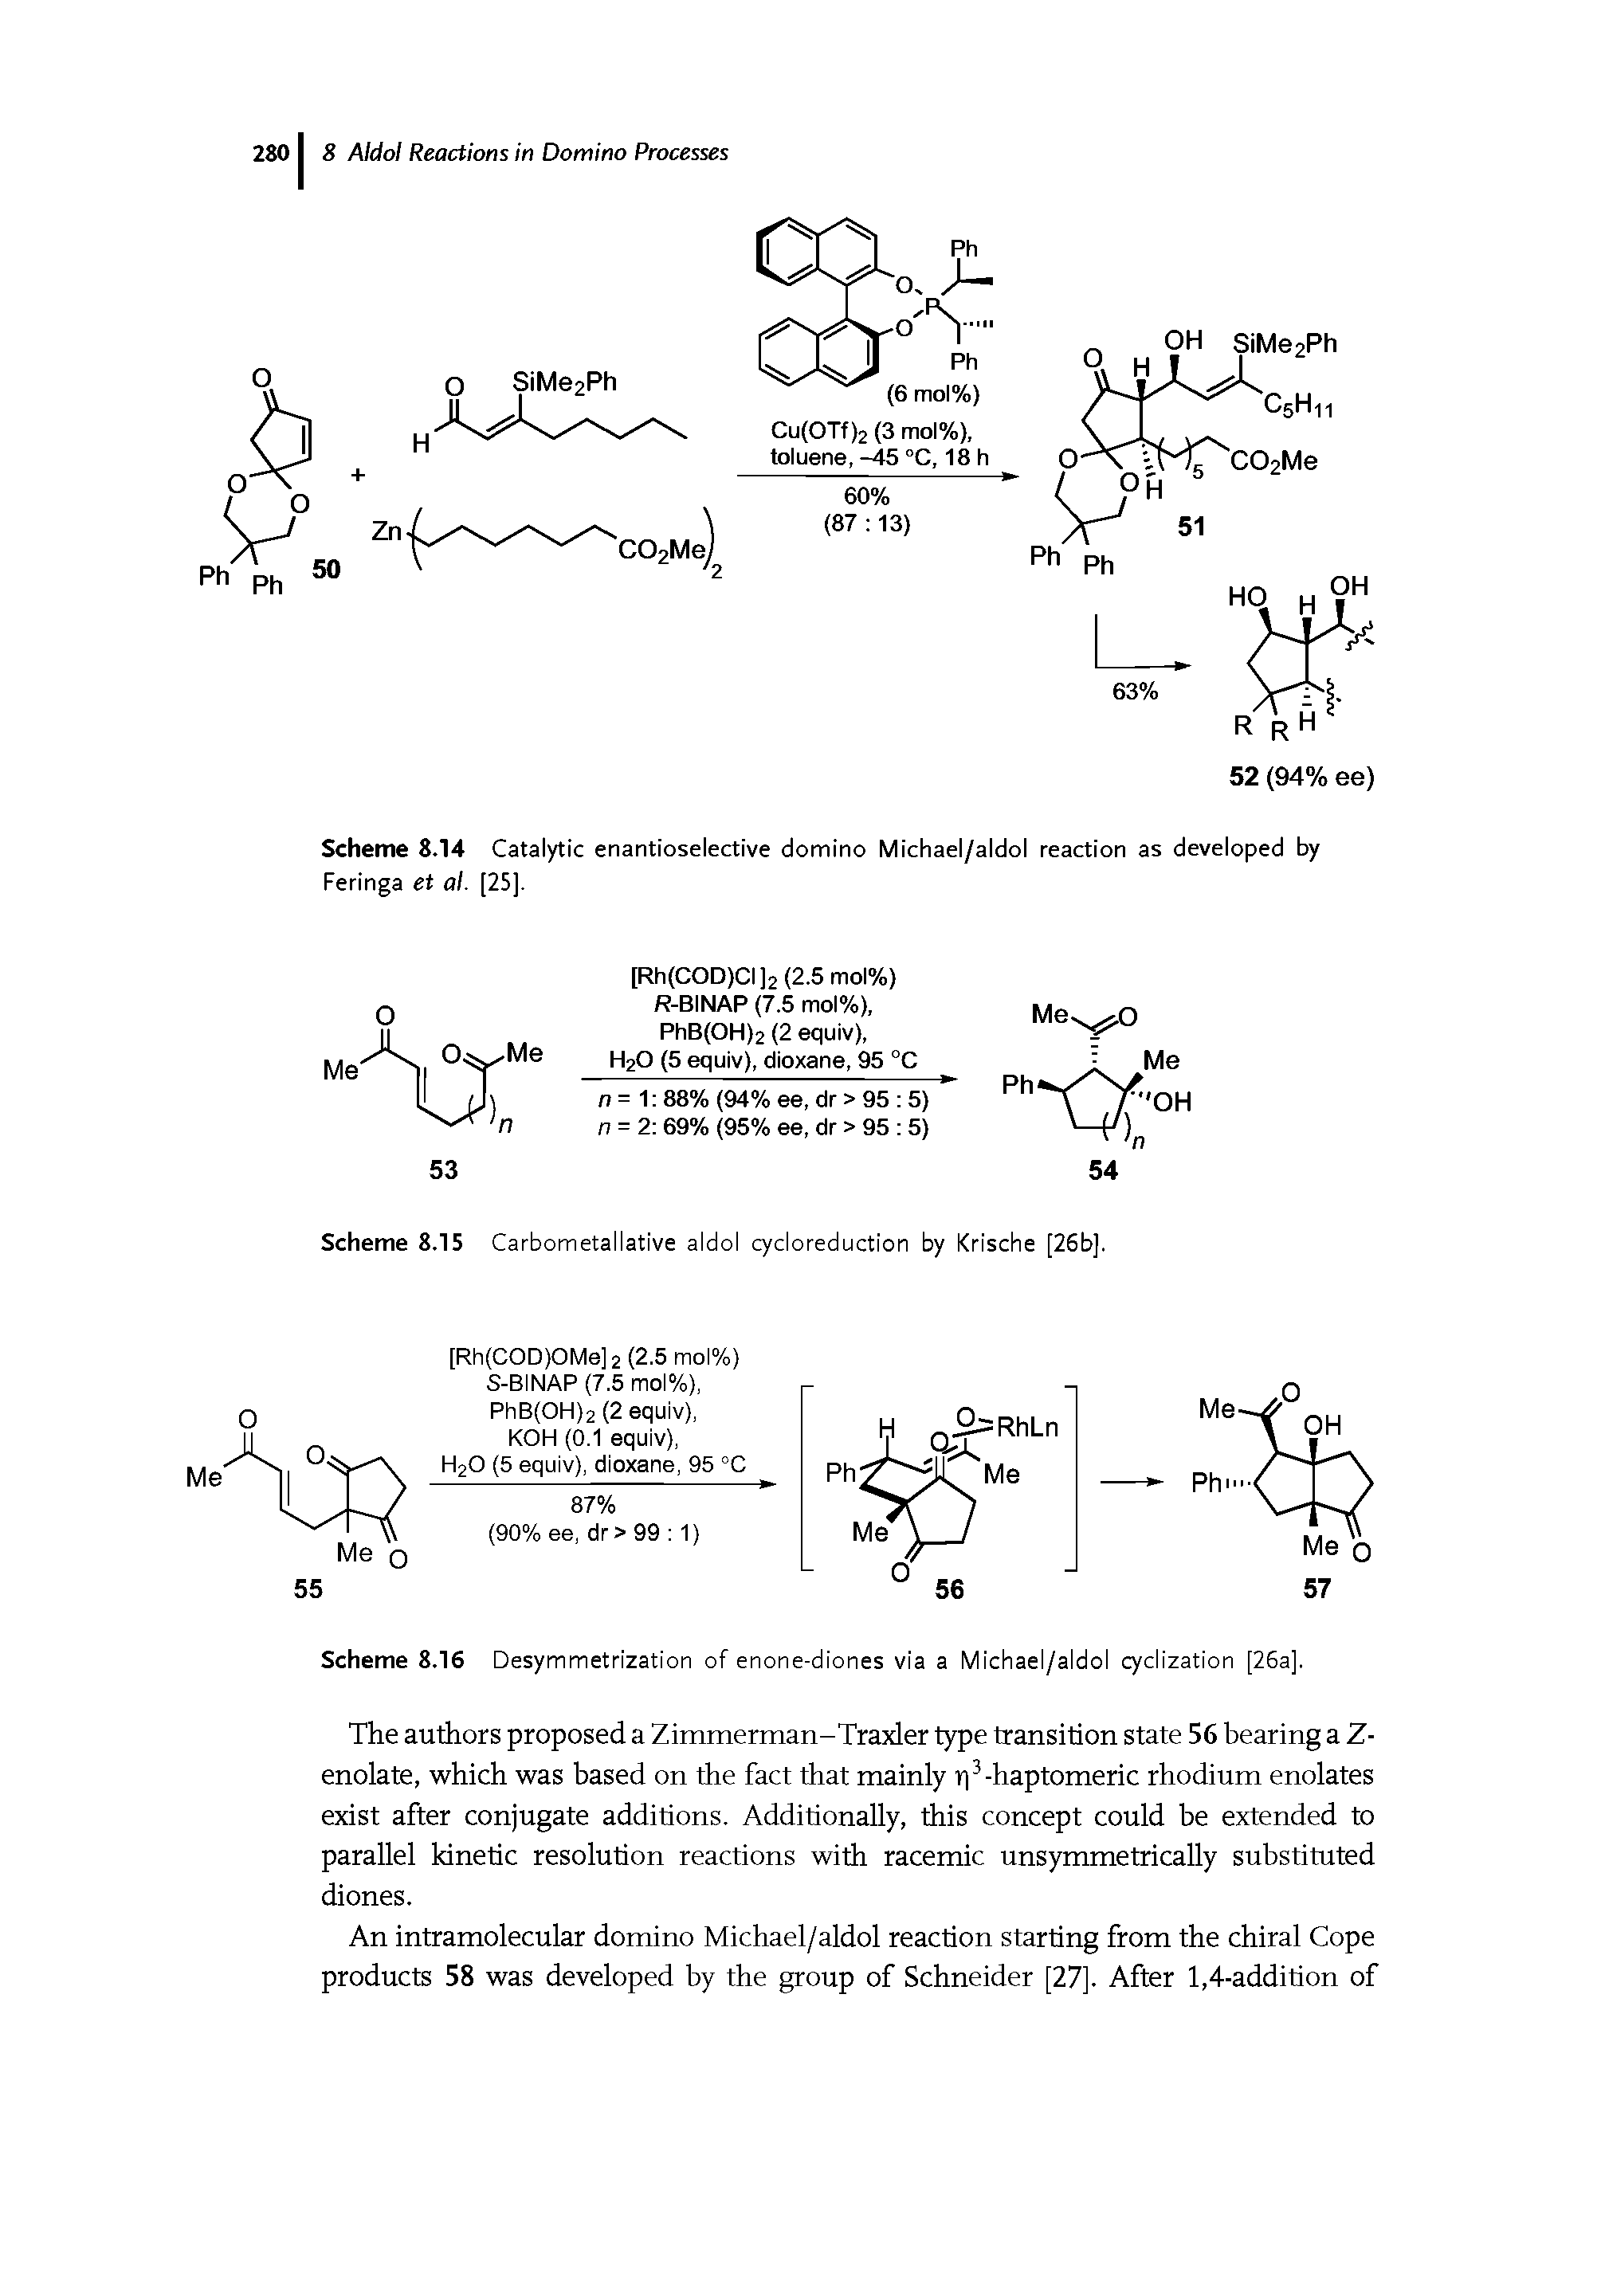 Scheme 8.14 Catalytic enantioselective domino Michael/aldol reaction as developed by Feringa et al. [25].